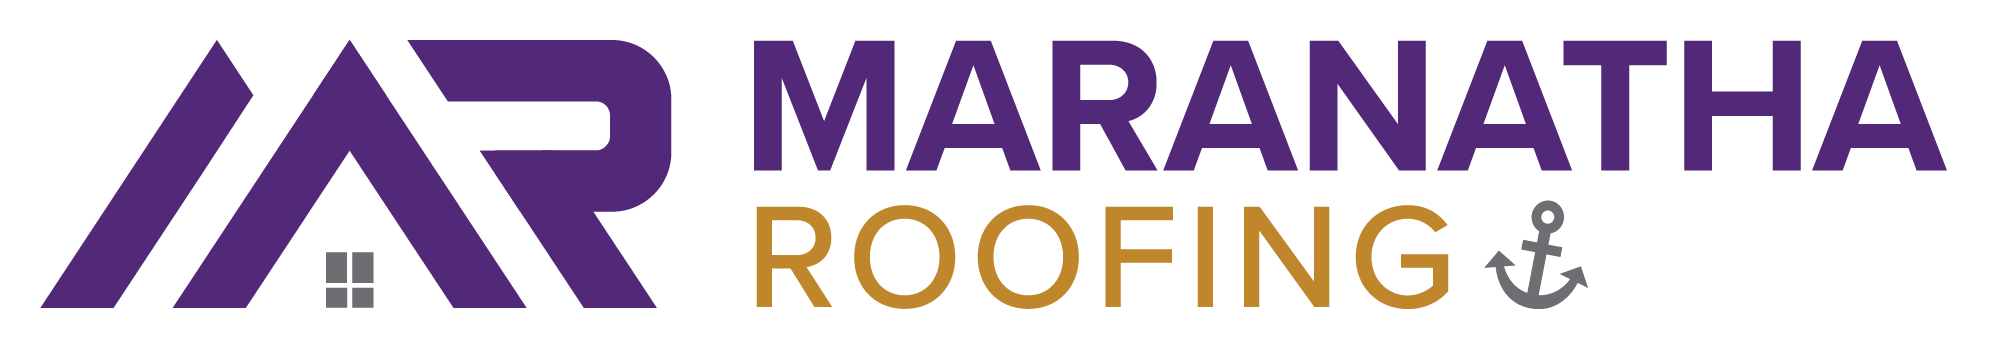 Maranatha-Roofing-Logo